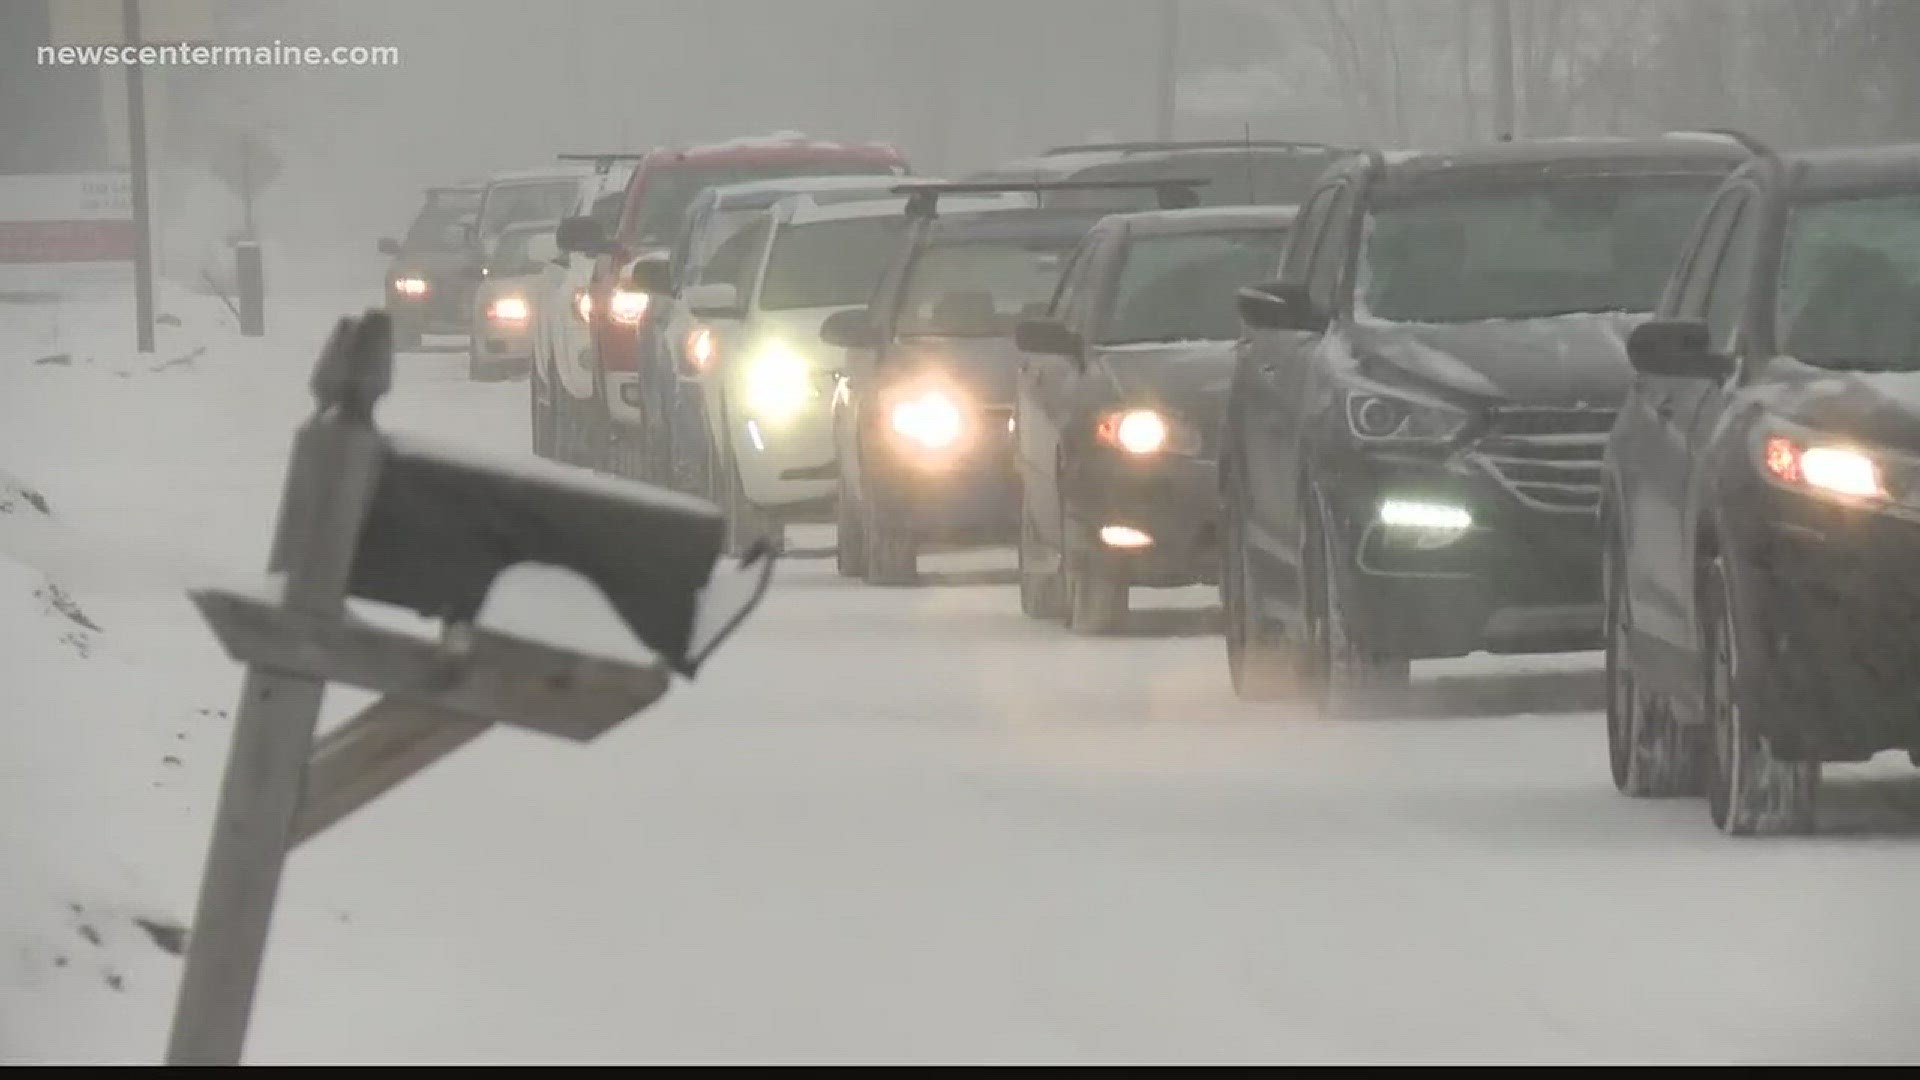 NOW: Snow storm creates commute nightmare